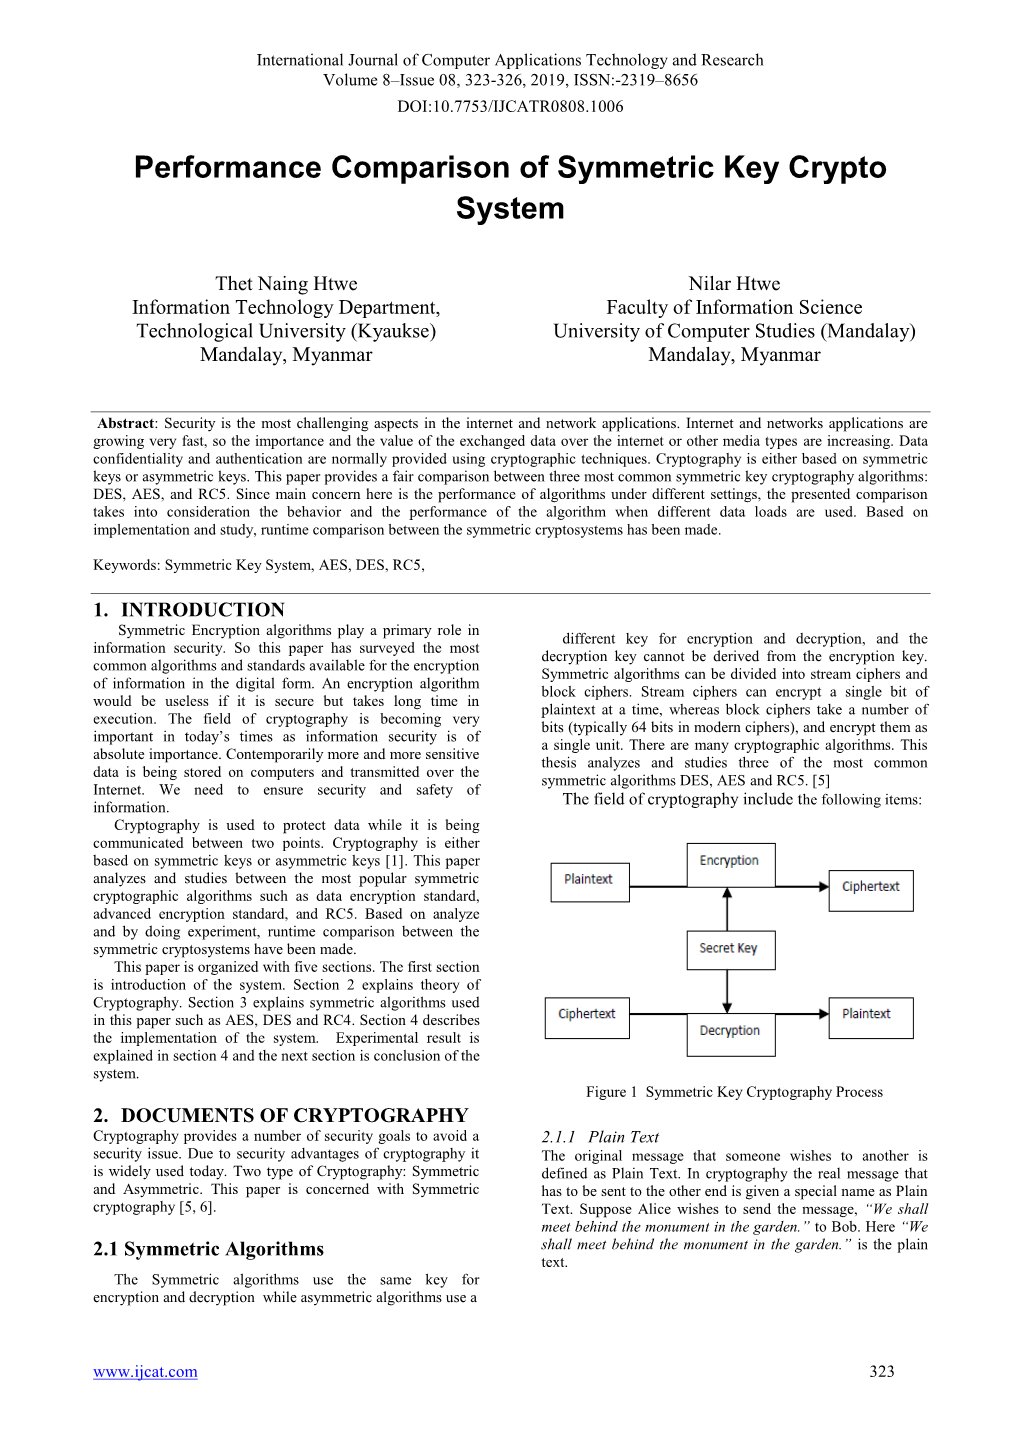 Performance Comparison of Symmetric Key Crypto System